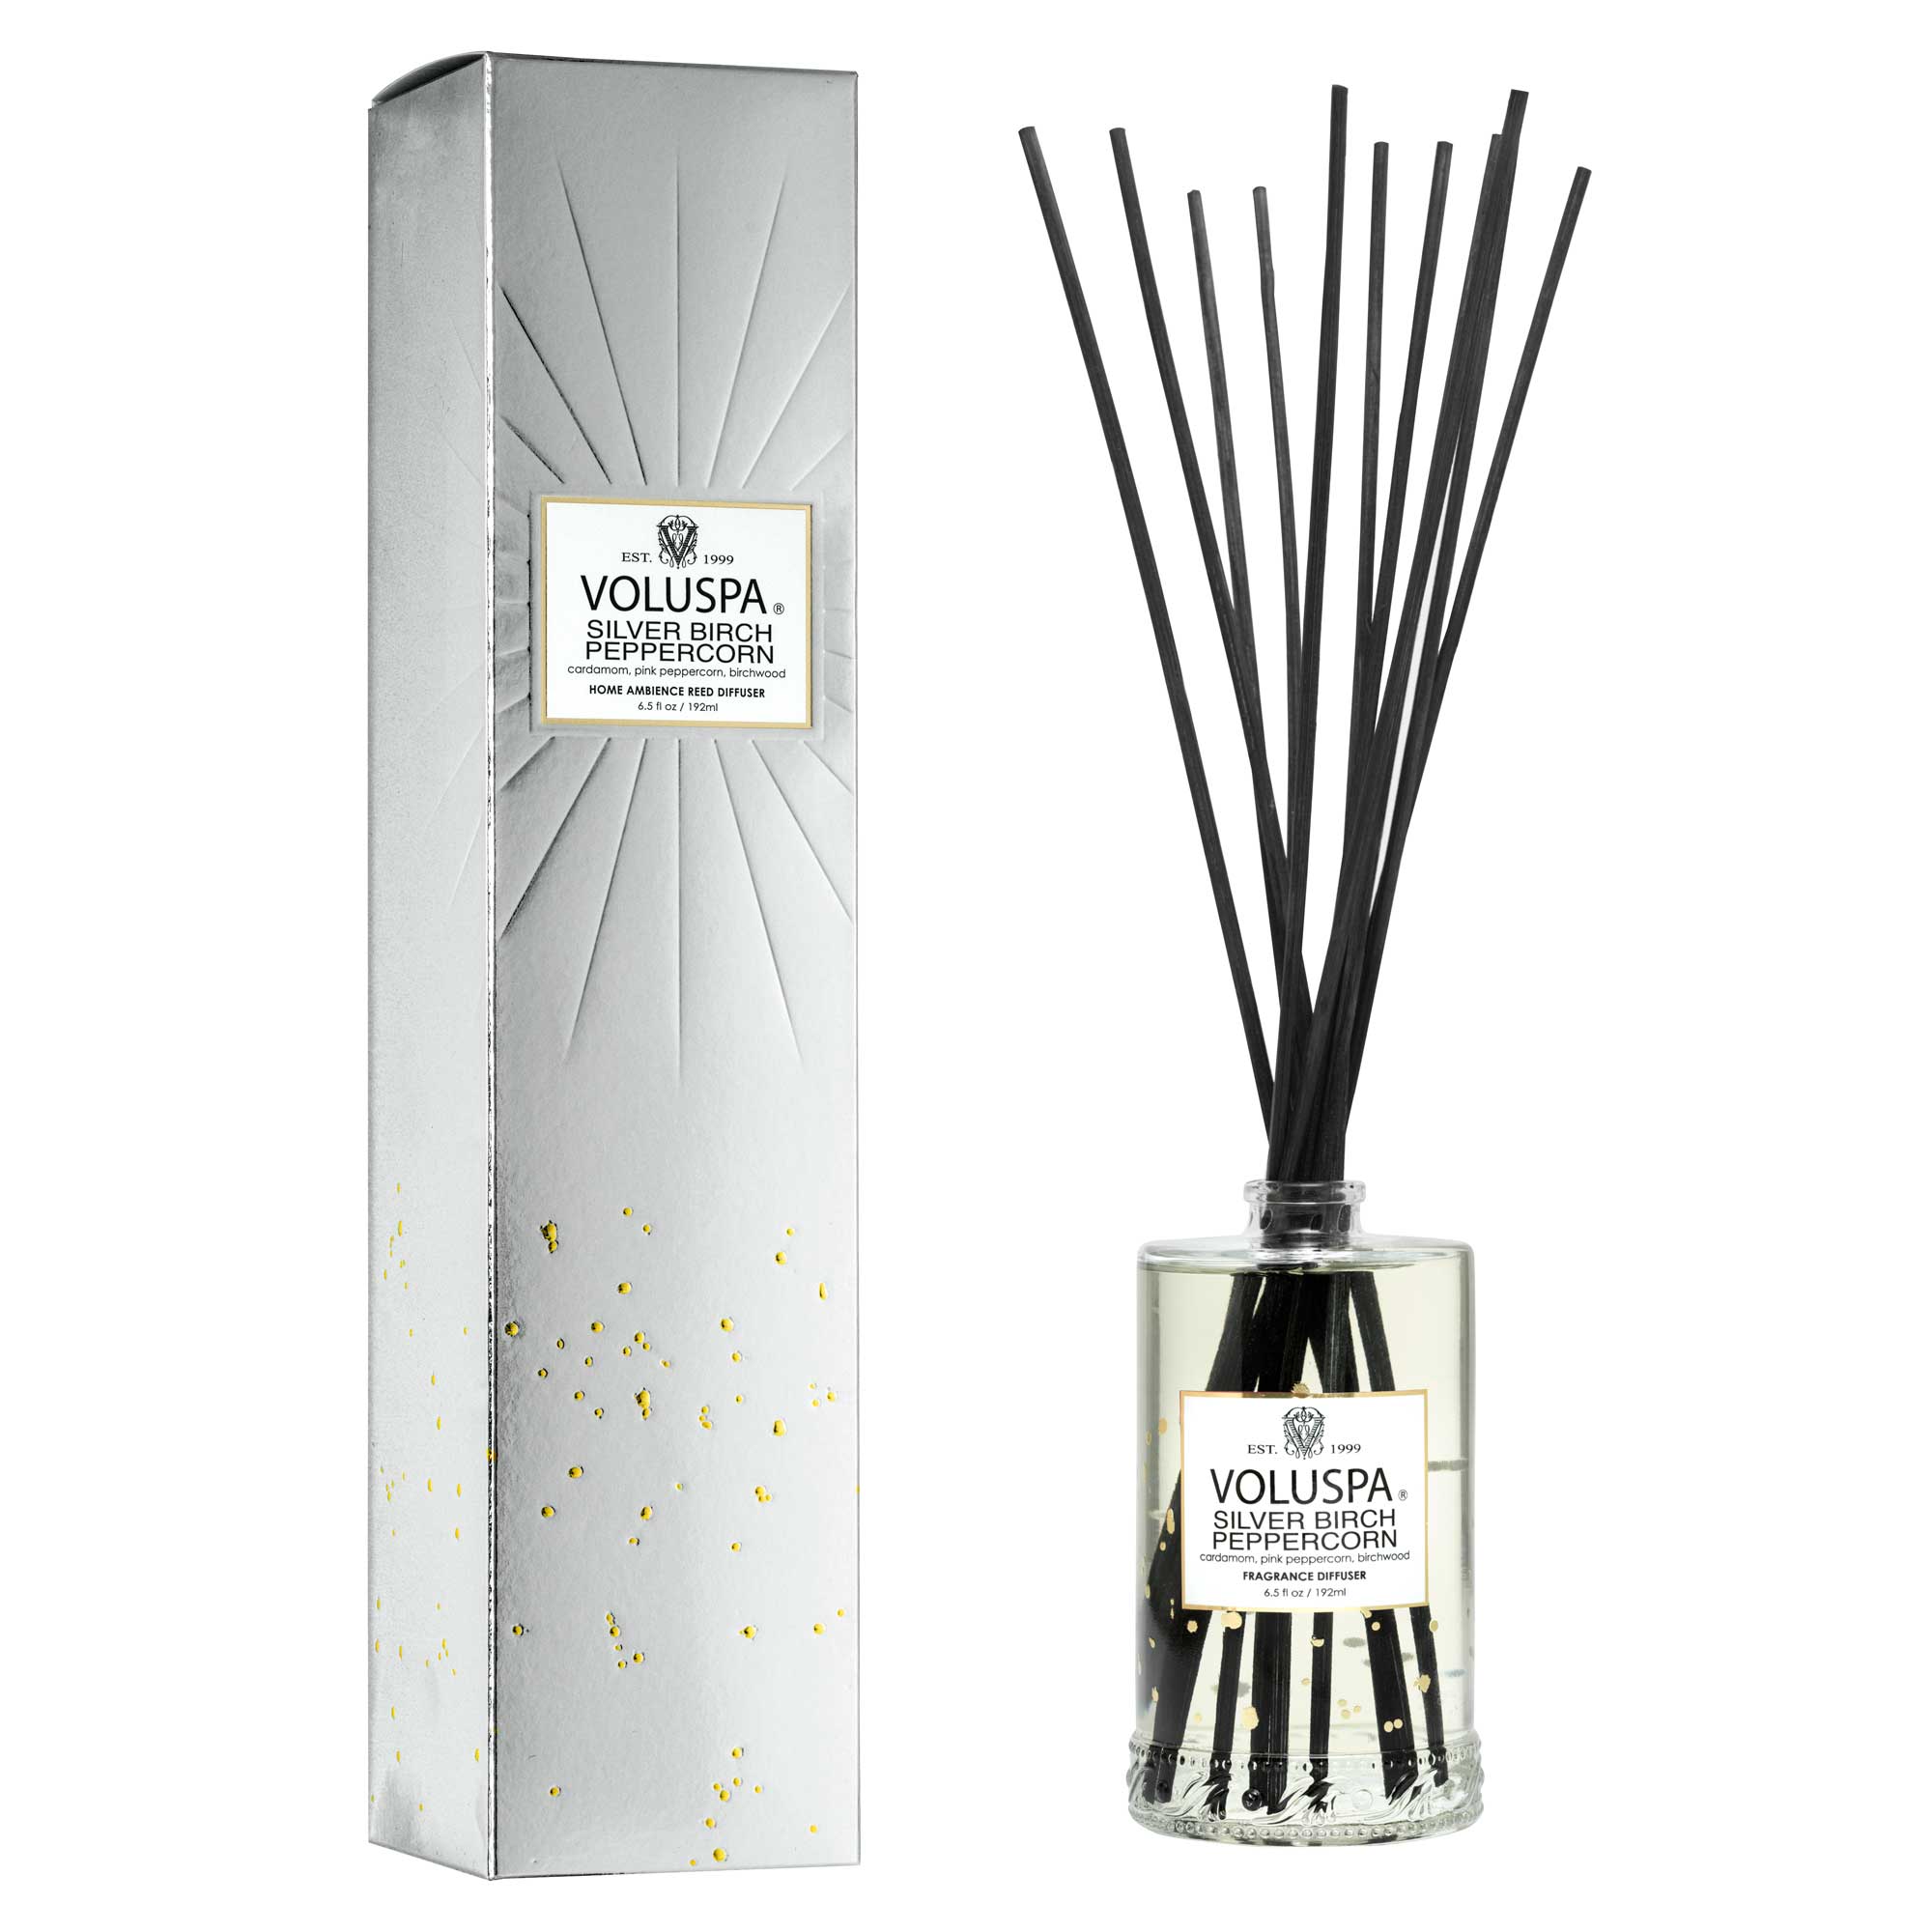 Cedre Esteban perfume - a fragrance for women and men 2007